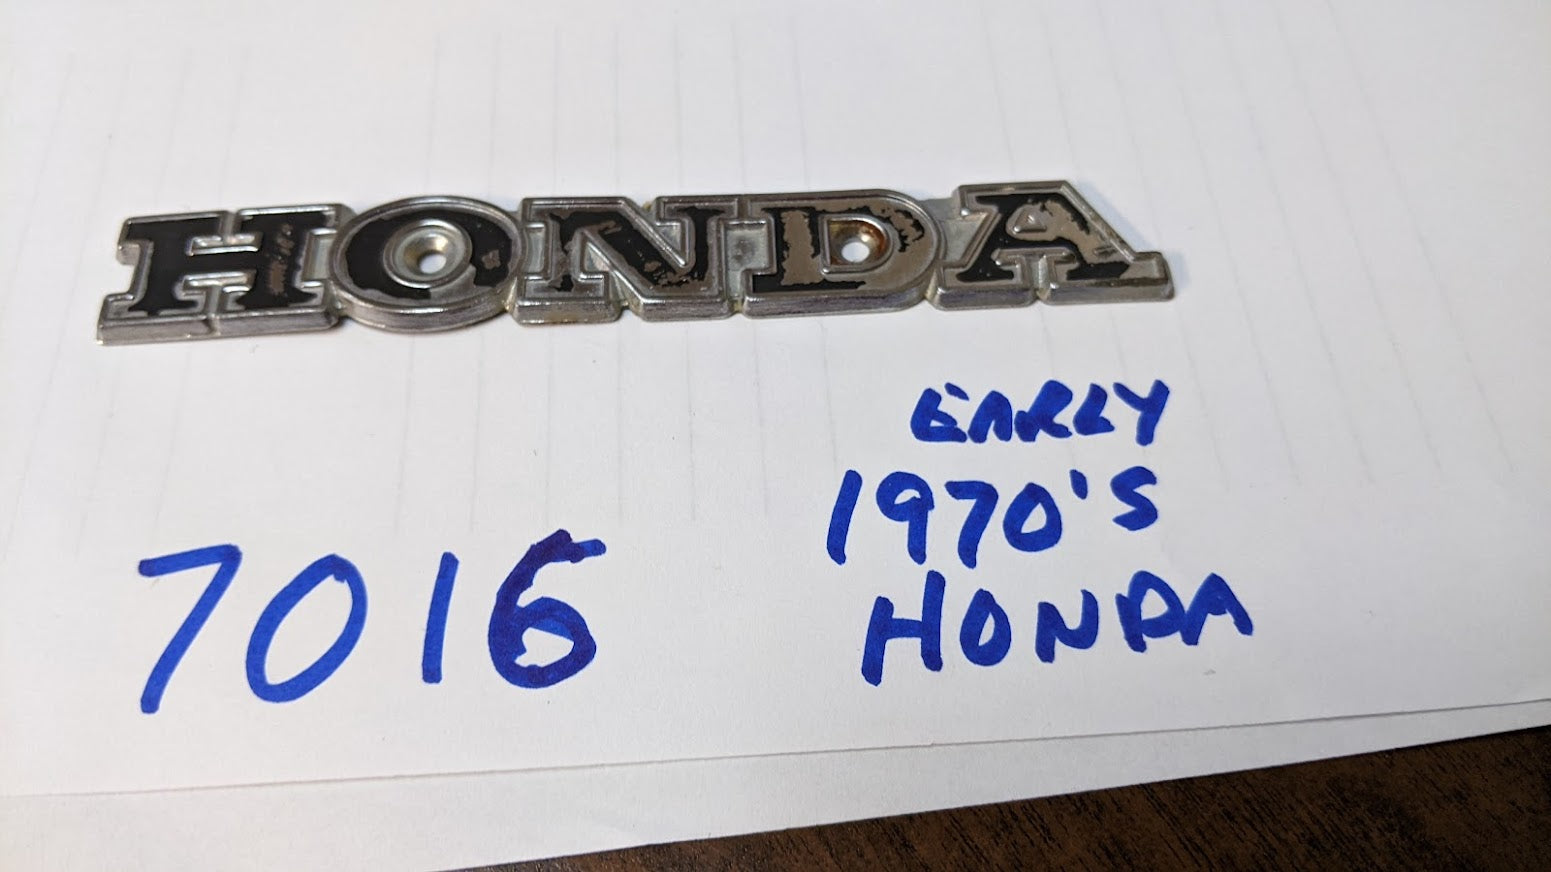 Honda CA95 150 Benly Left Gas Tank Badge NOS sku 7030 –  ClassicJapaneseMotorcycles